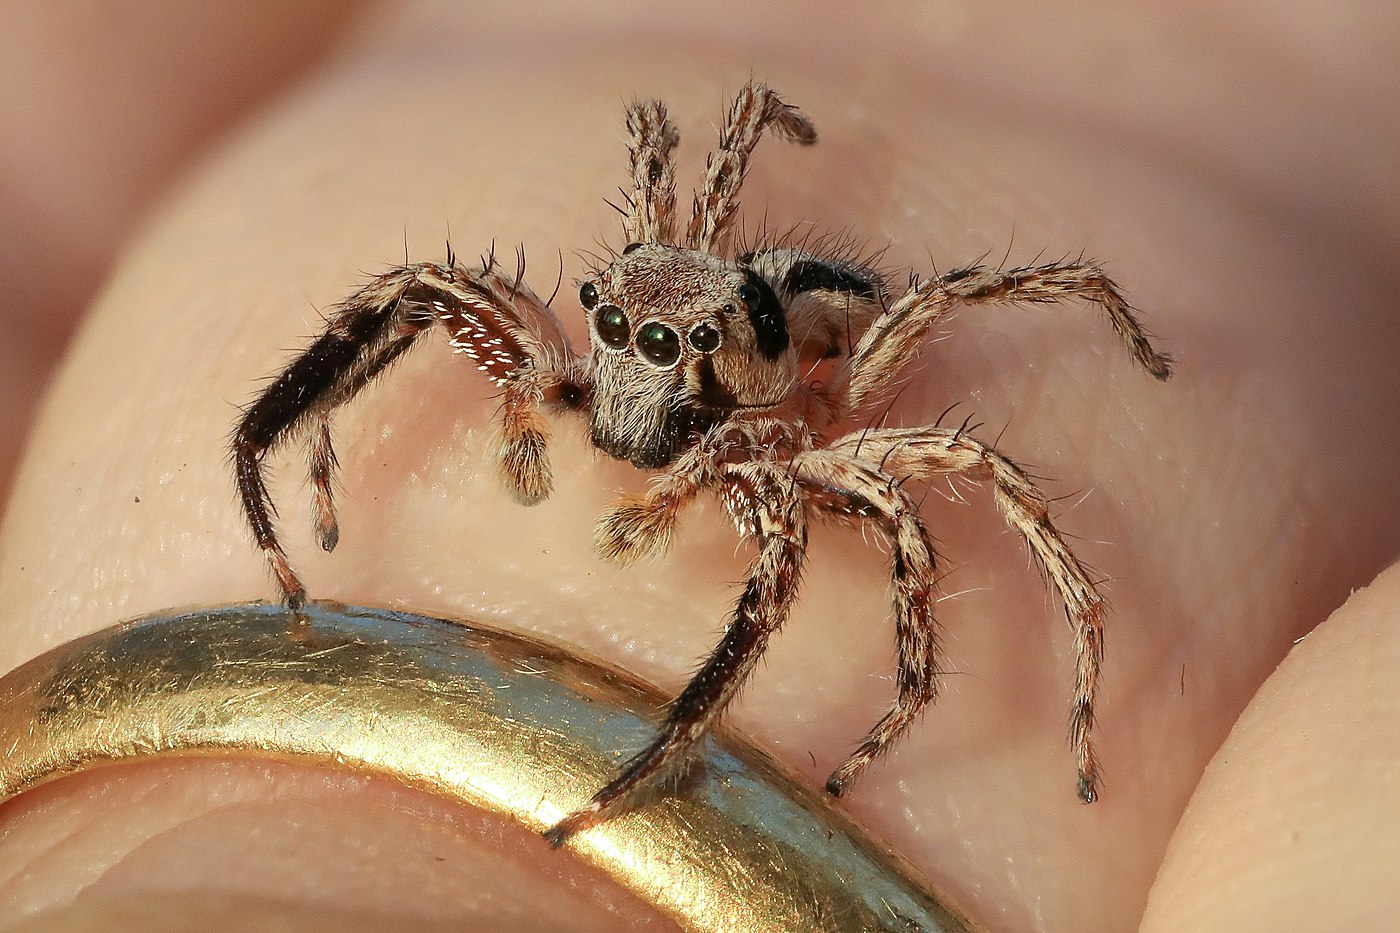 Plexippus petersi (jumping spider), male, on a human finger